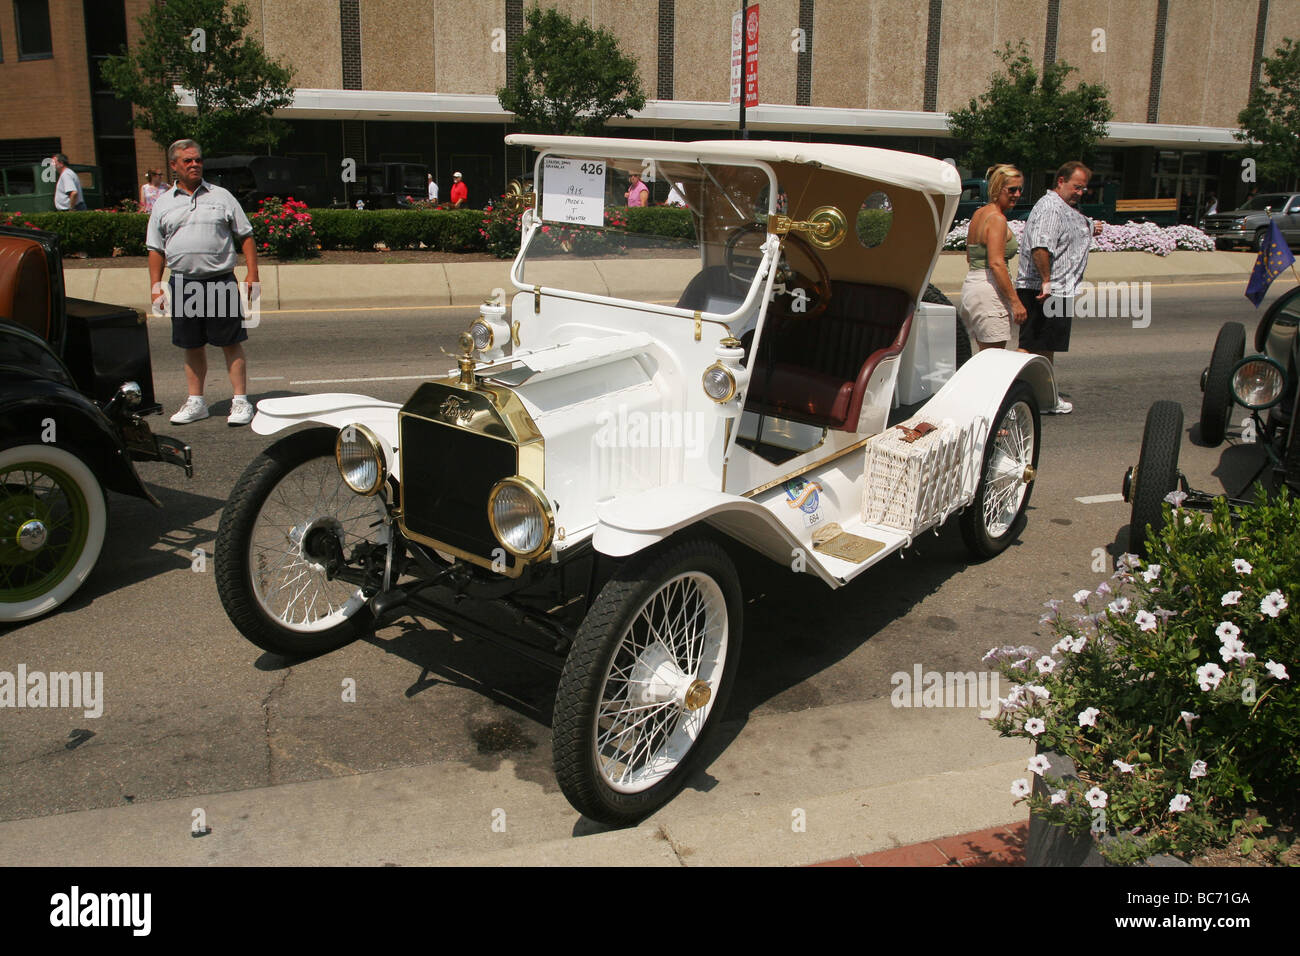 125 Awesome Antique car parade hamilton ohio 2017 Desktop Background